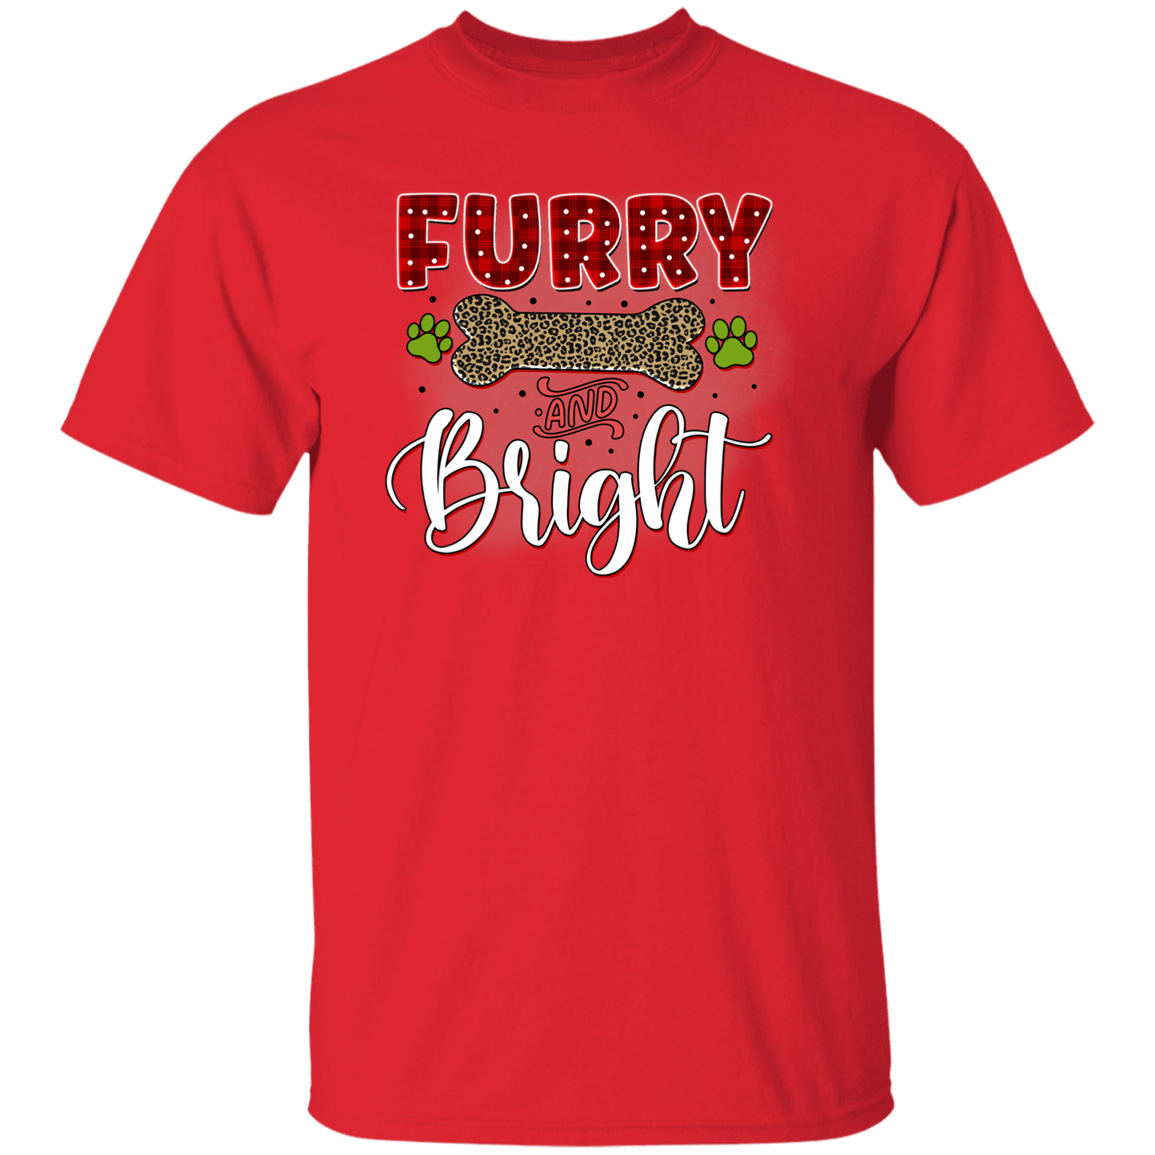 Furry & Bright Christmas Dog T-Shirt